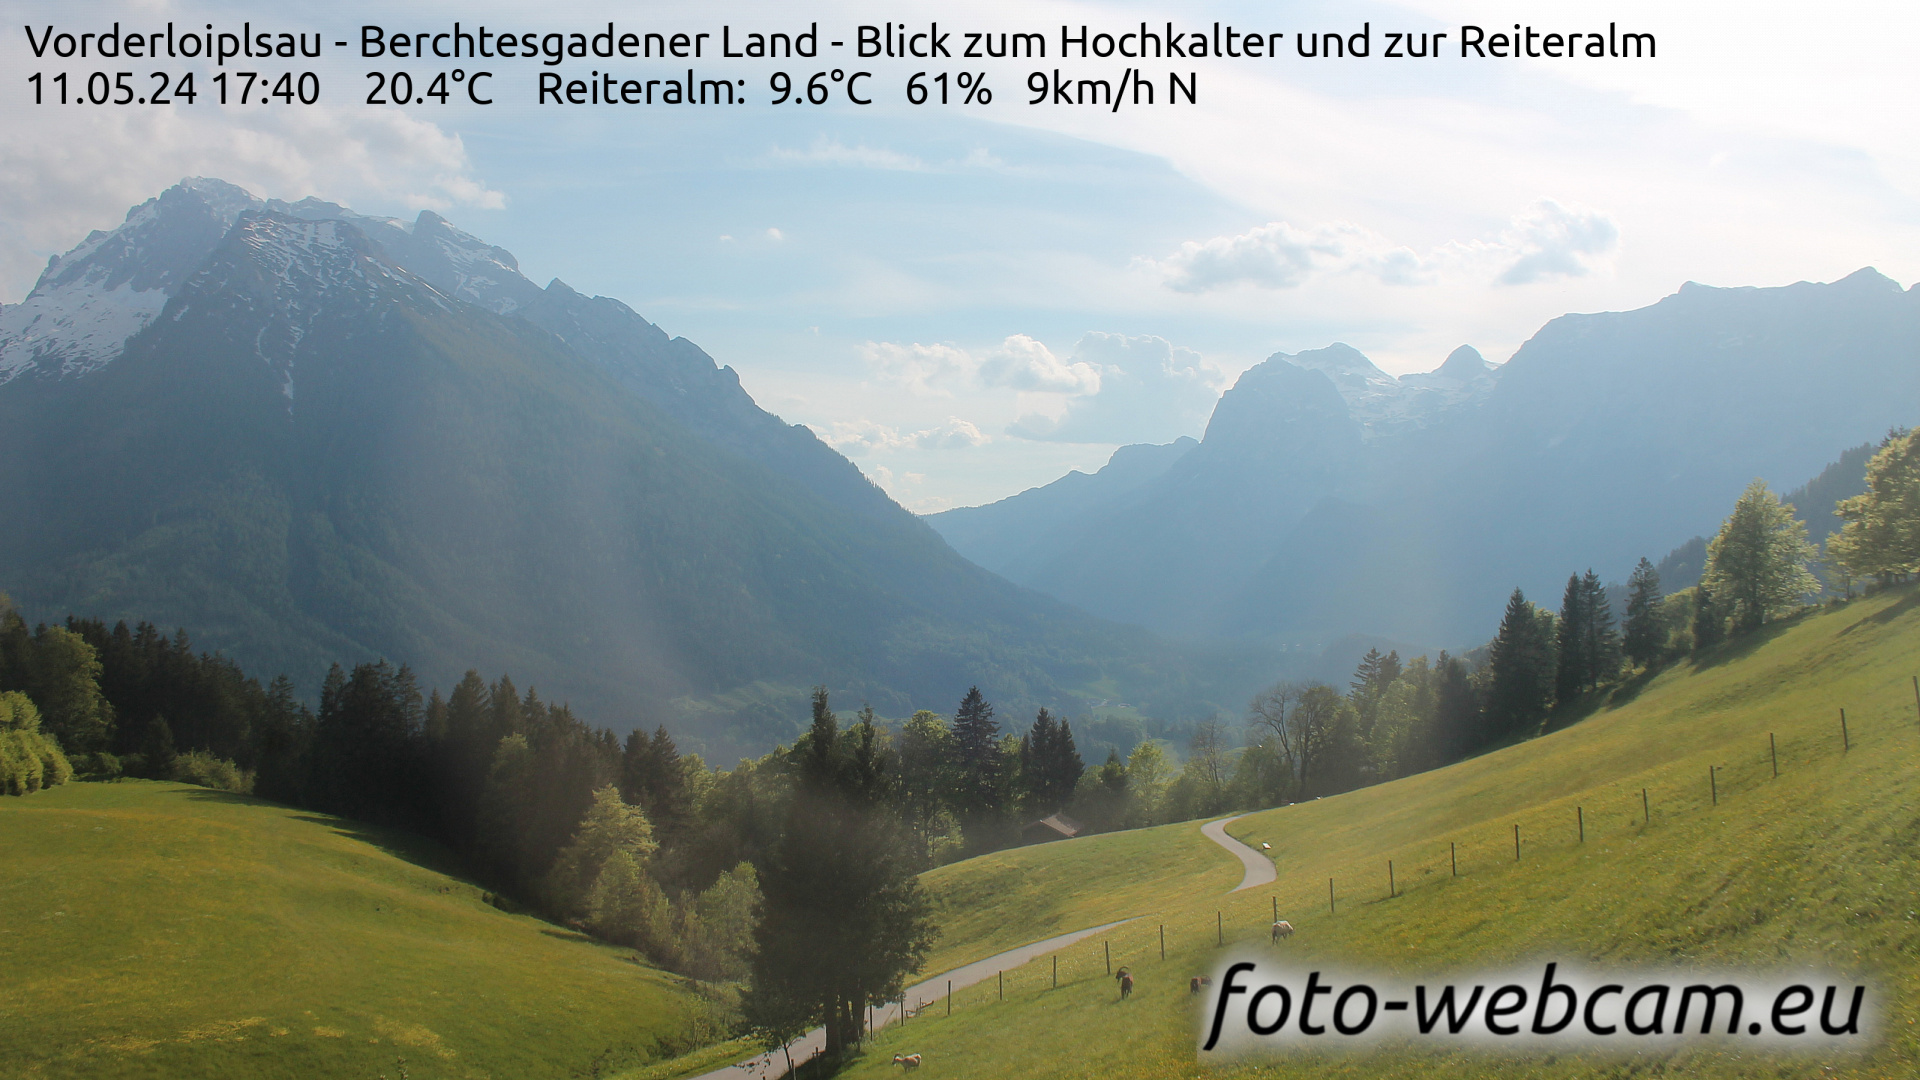 Ramsau bei Berchtesgaden Me. 17:48